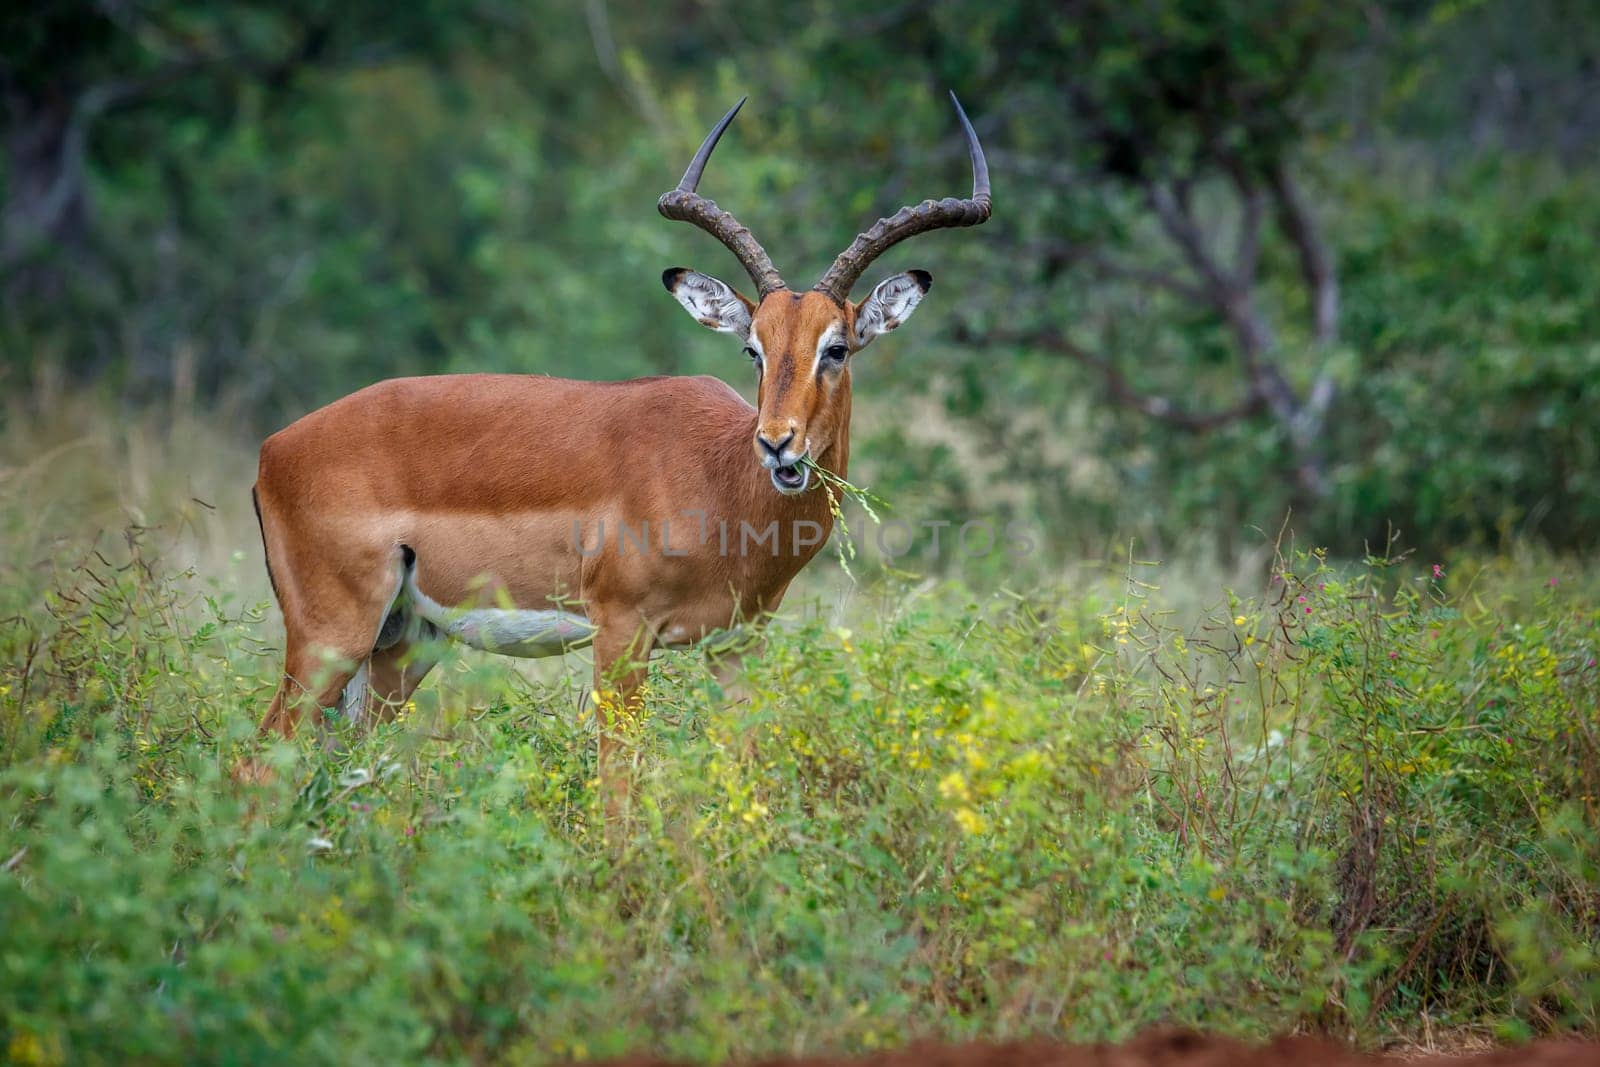 Common Impala horned male grazing in Kruger National park, South Africa ; Specie Aepyceros melampus family of Bovidae